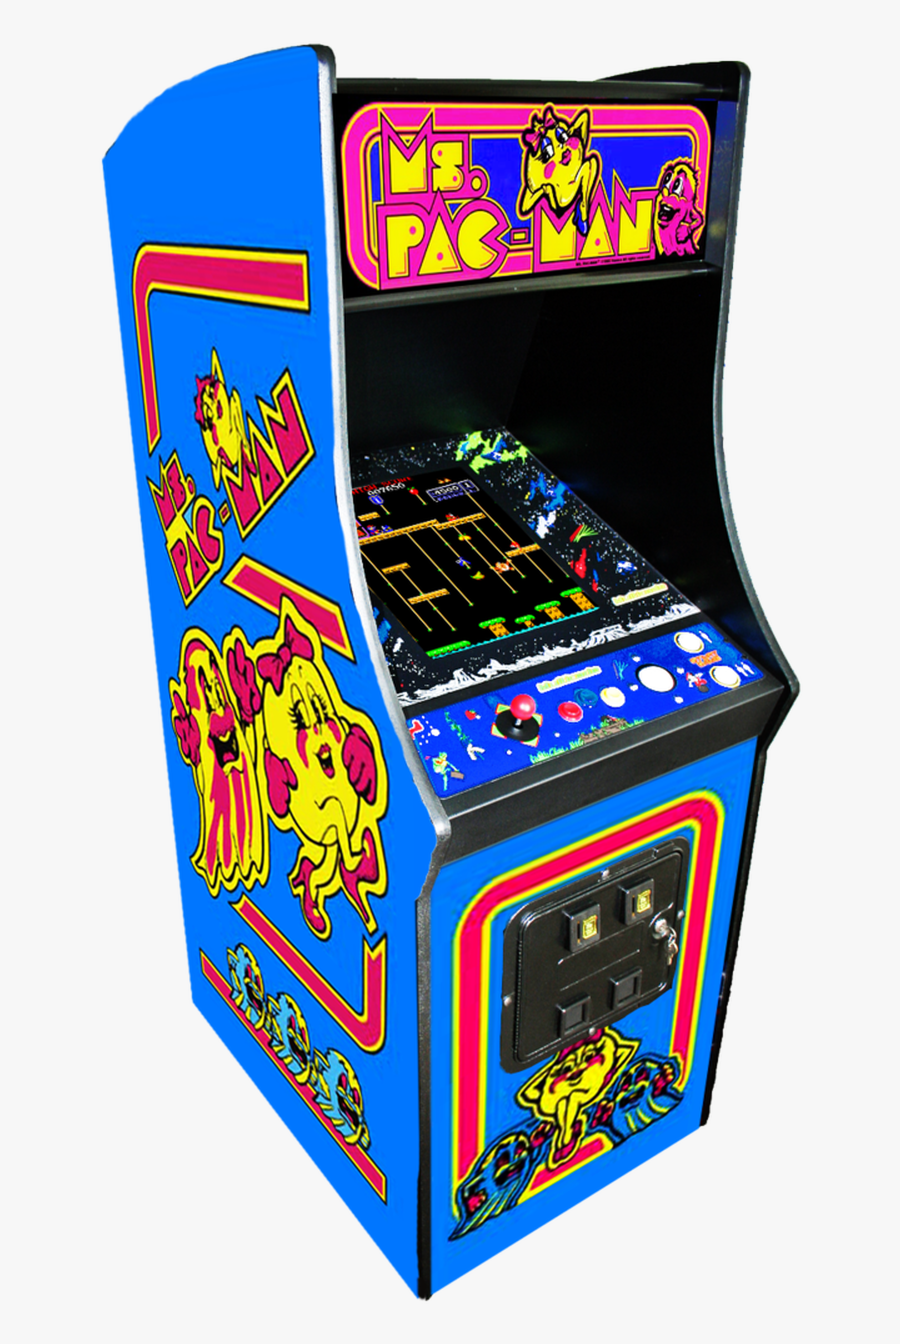 Image Loading Error - Pac Man Arcade, Transparent Clipart